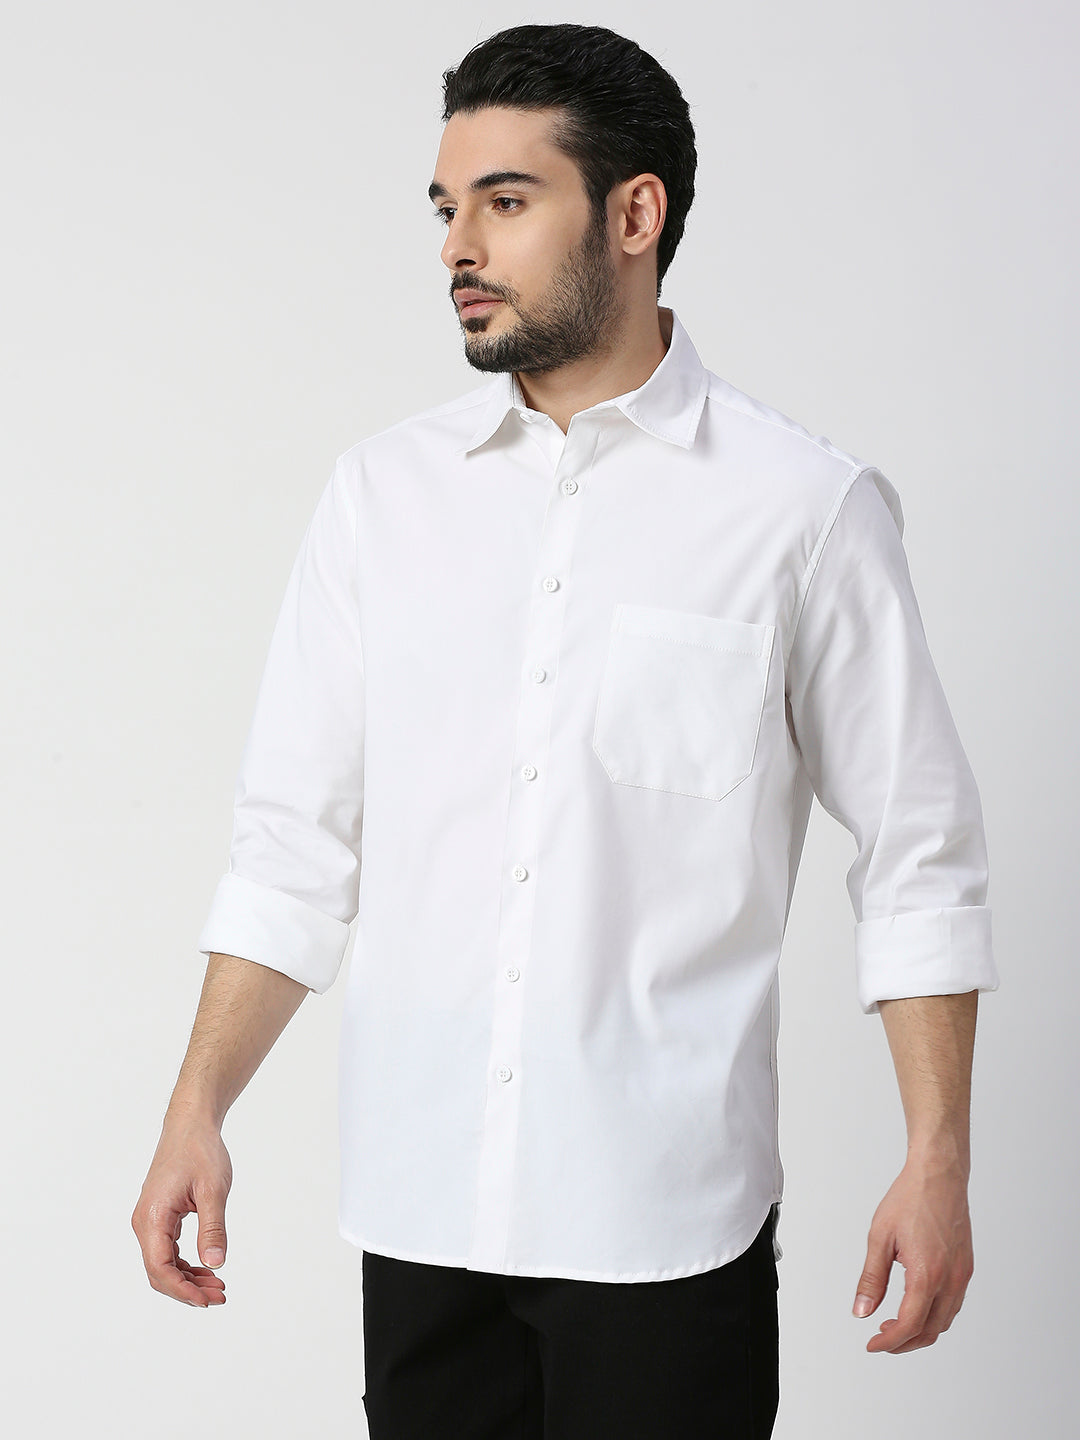 Buy Blamblack White colour solid oversized shirt.